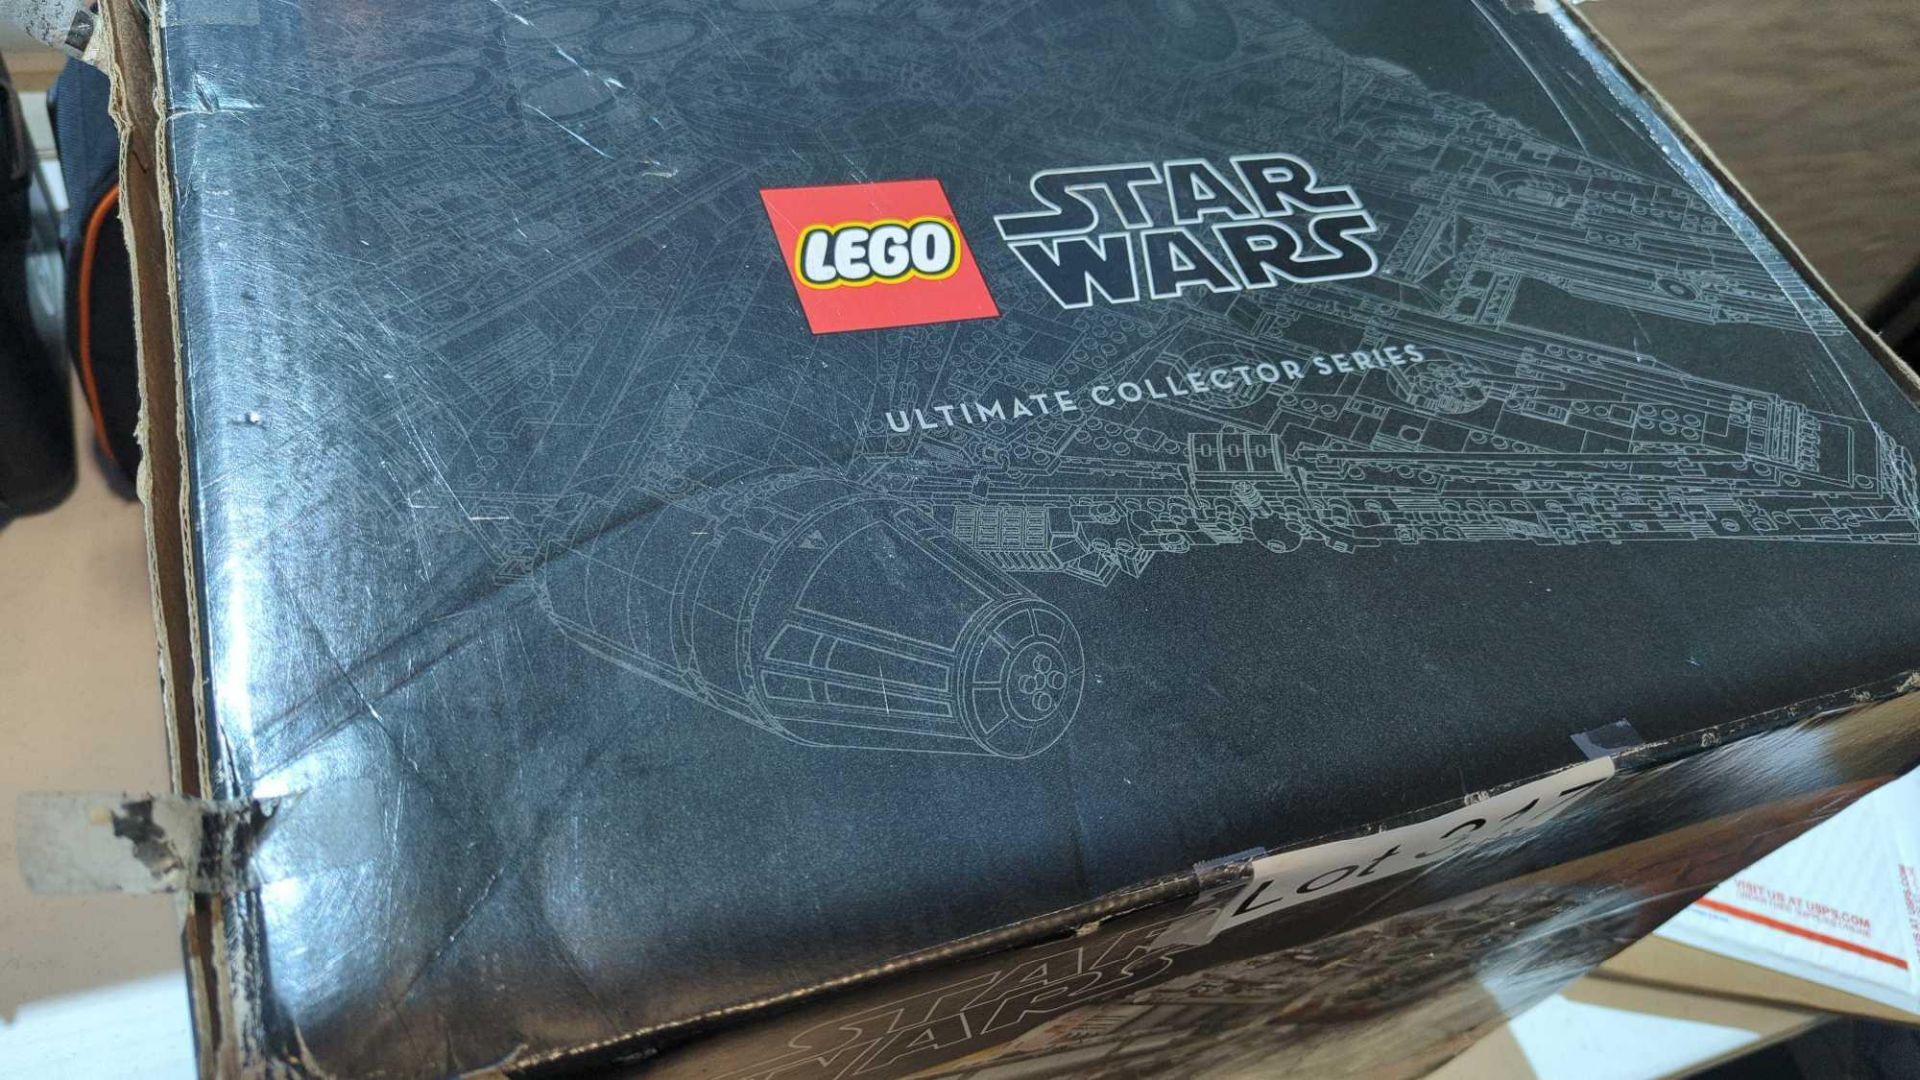 Lego Star Wars Millennium Falcon - Image 3 of 4